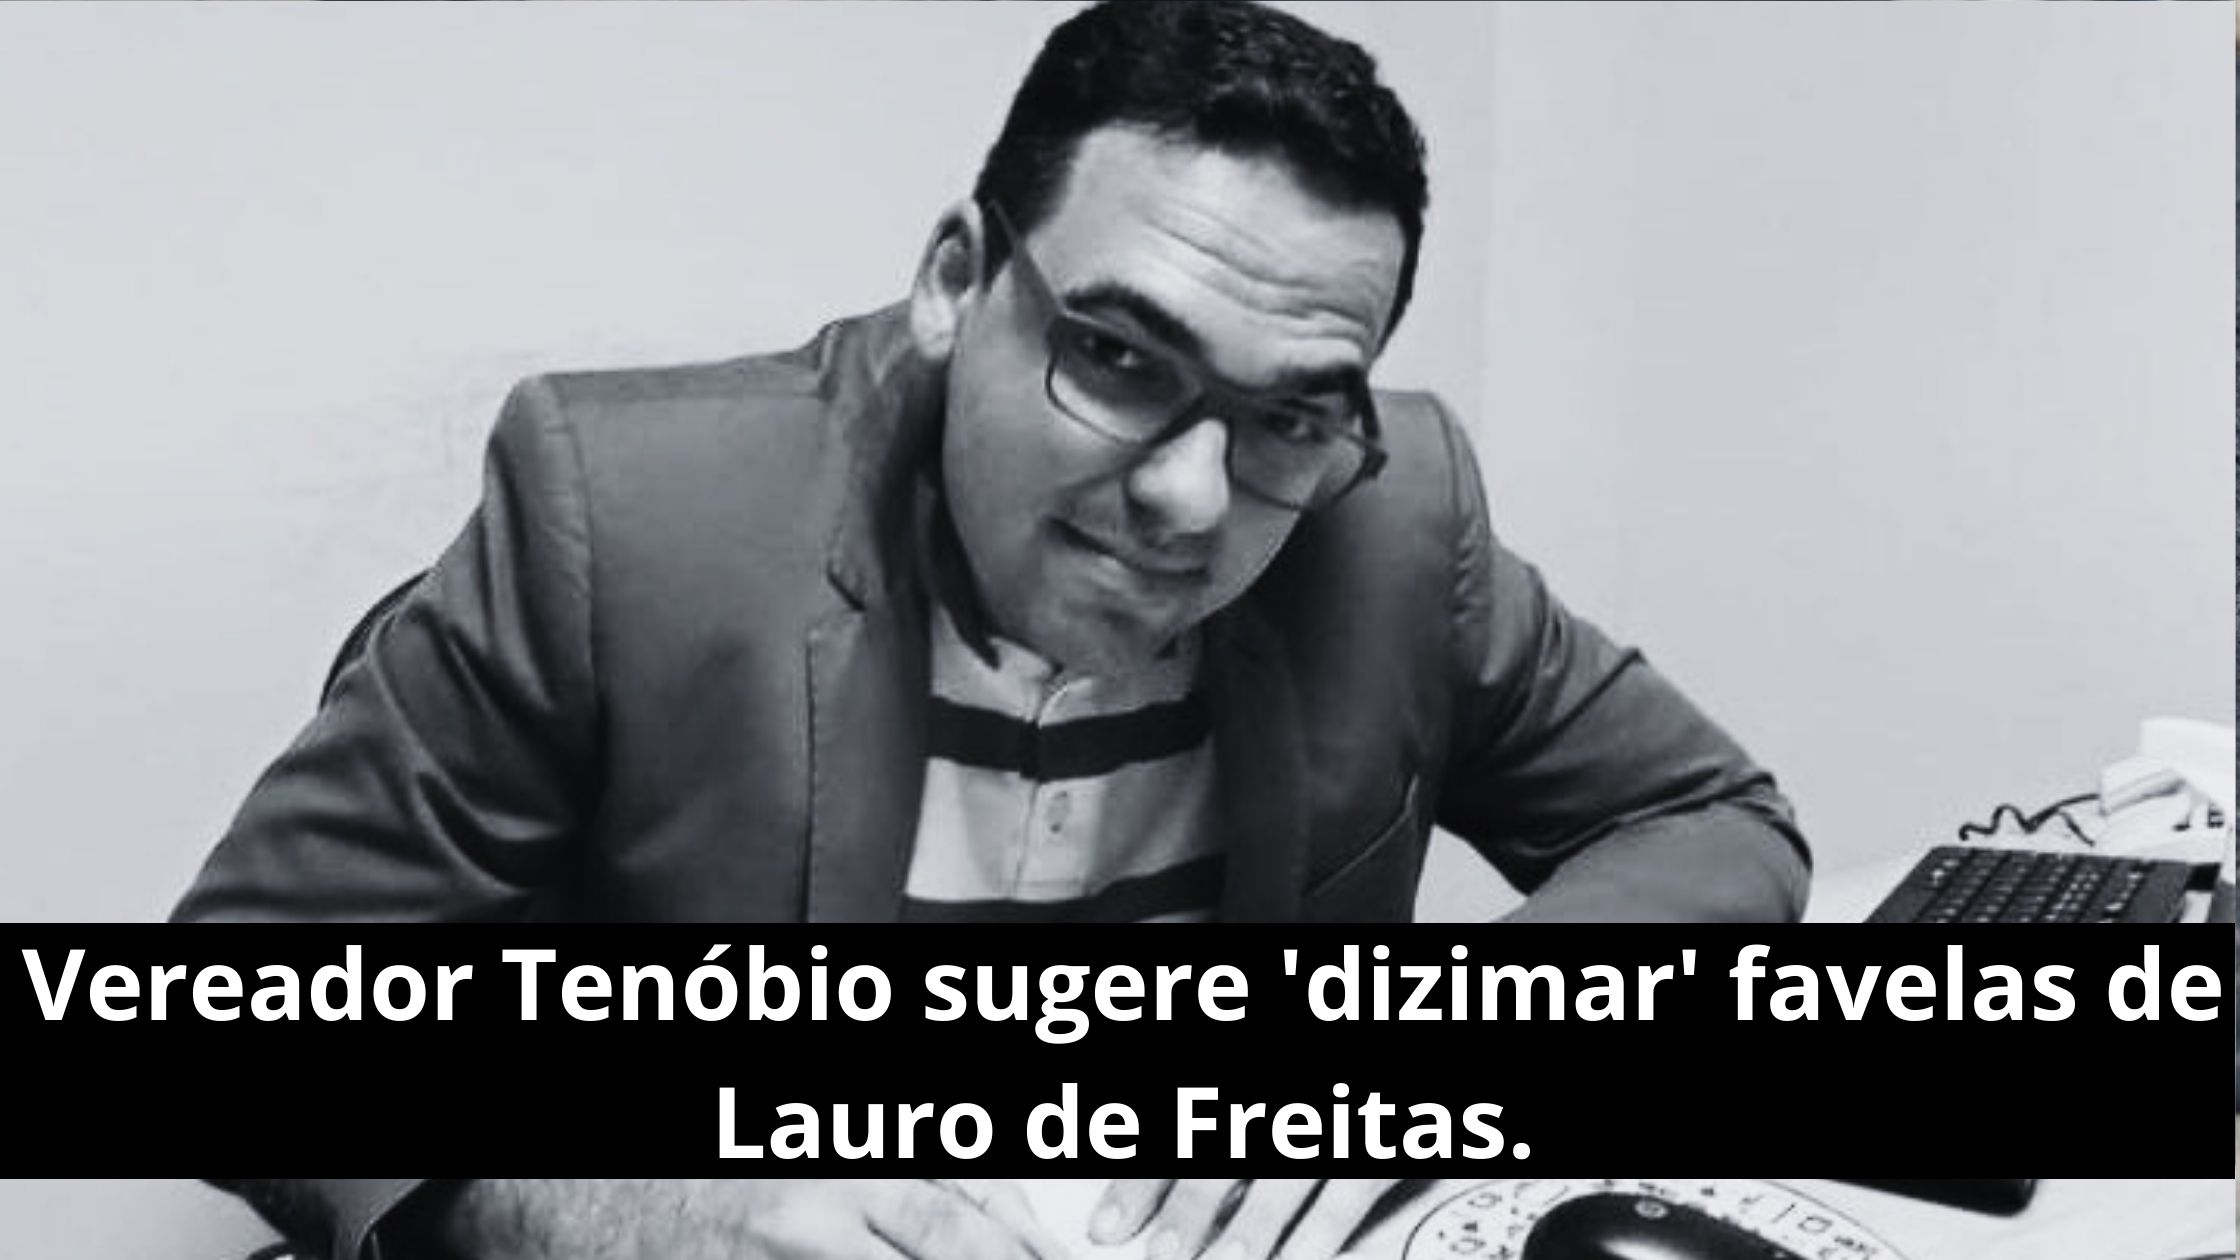 Lauro de Freitas